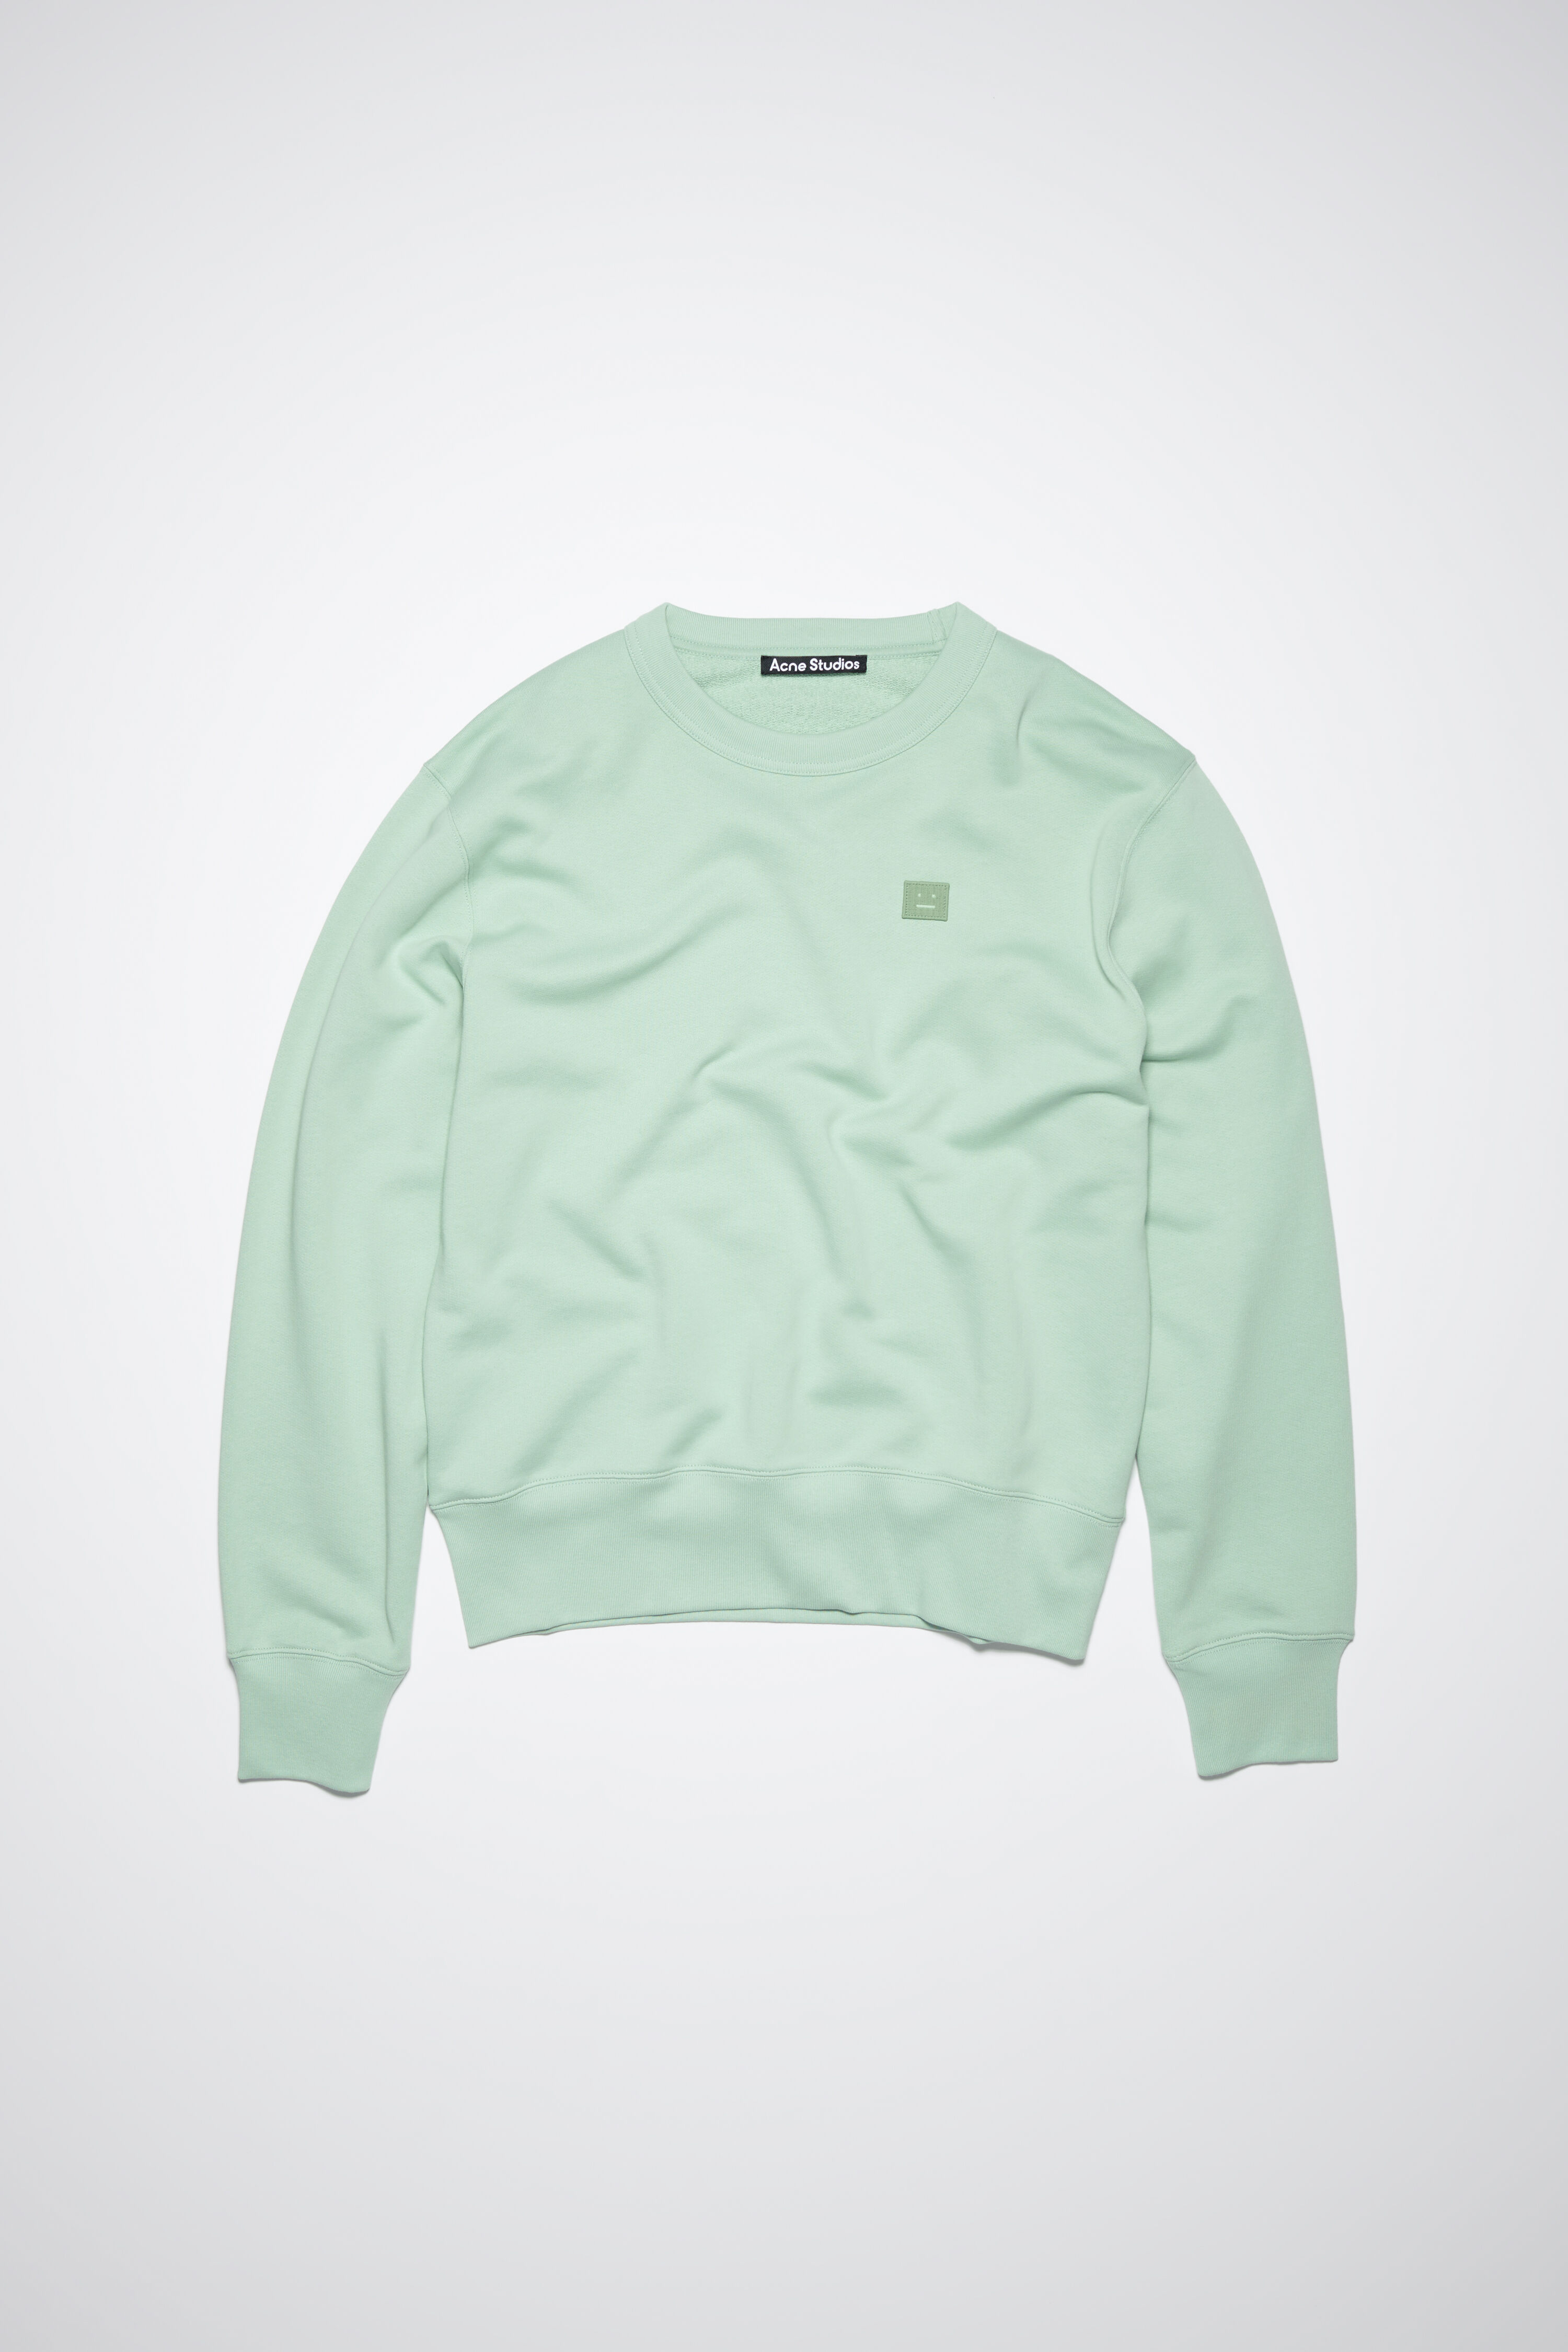 Acne Studios - Crew neck sweater - Soft green